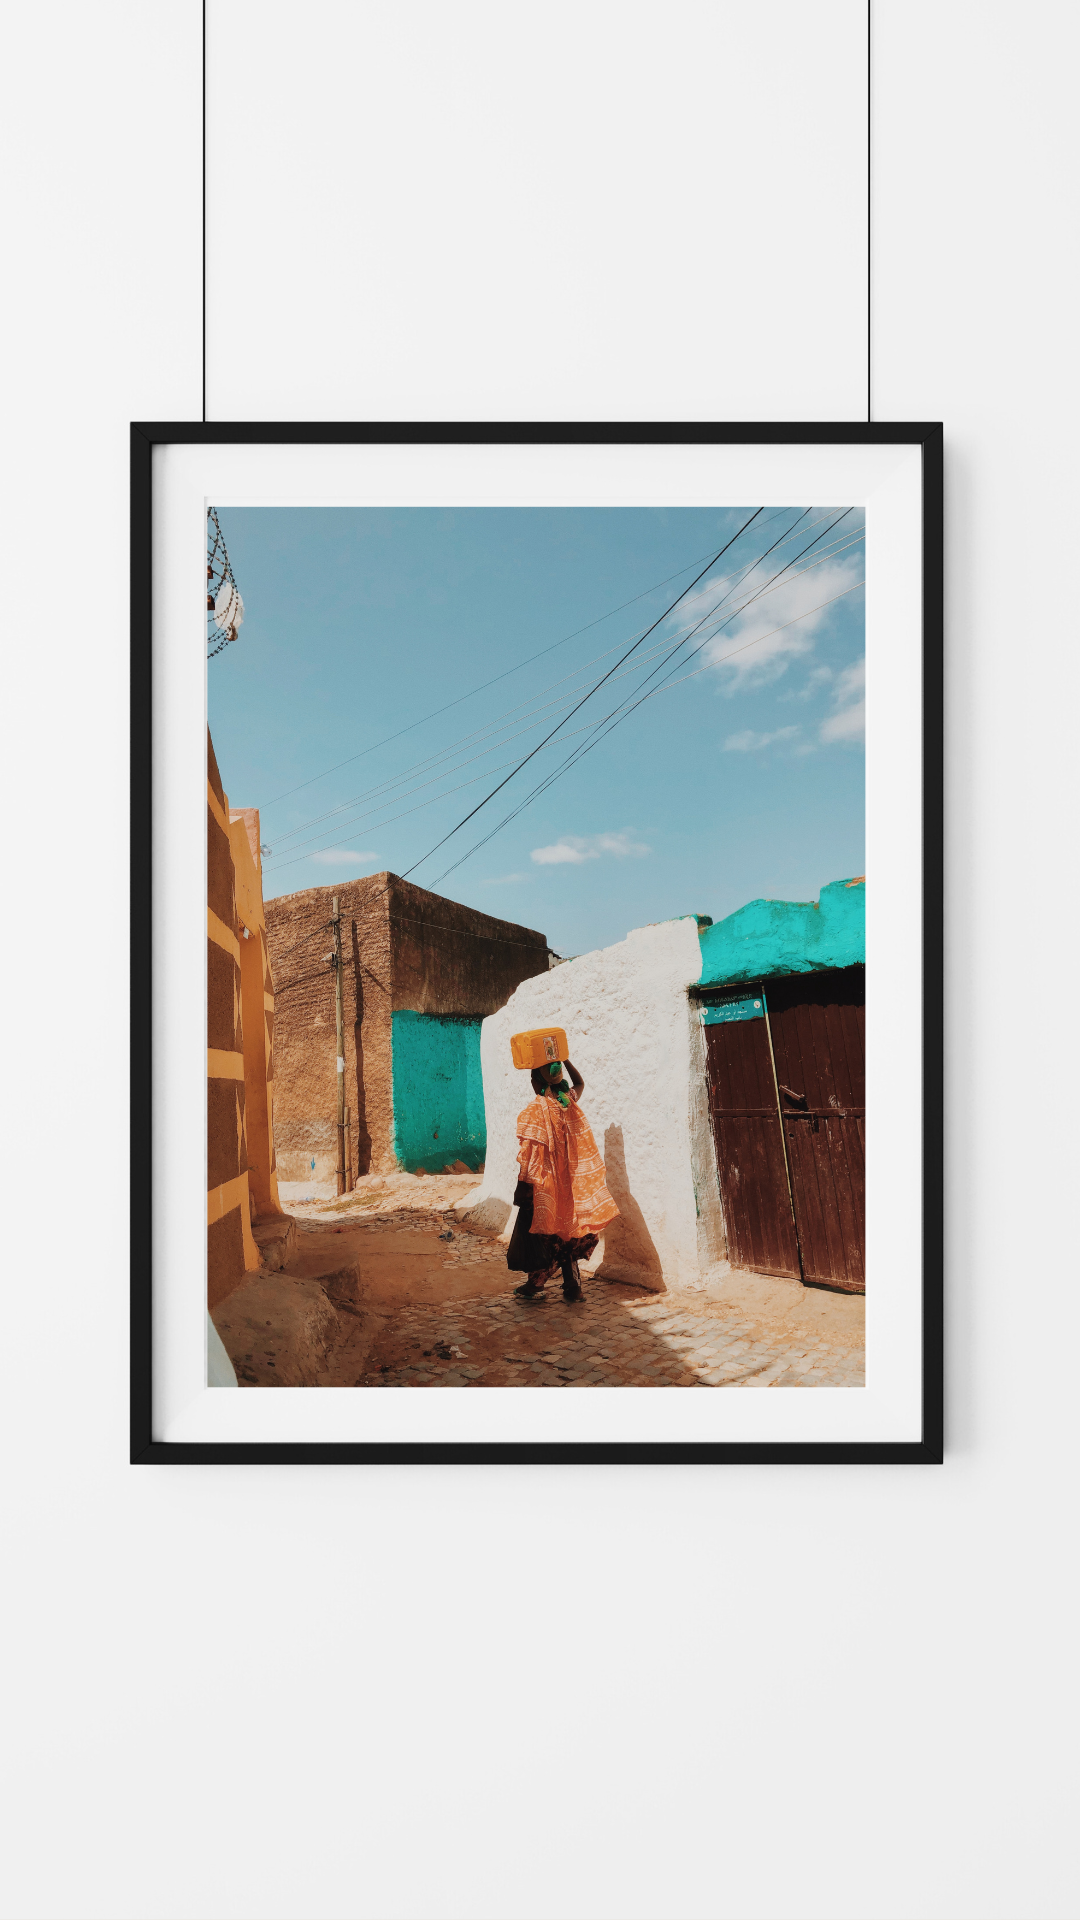 Photographie art africain en Ethiopie